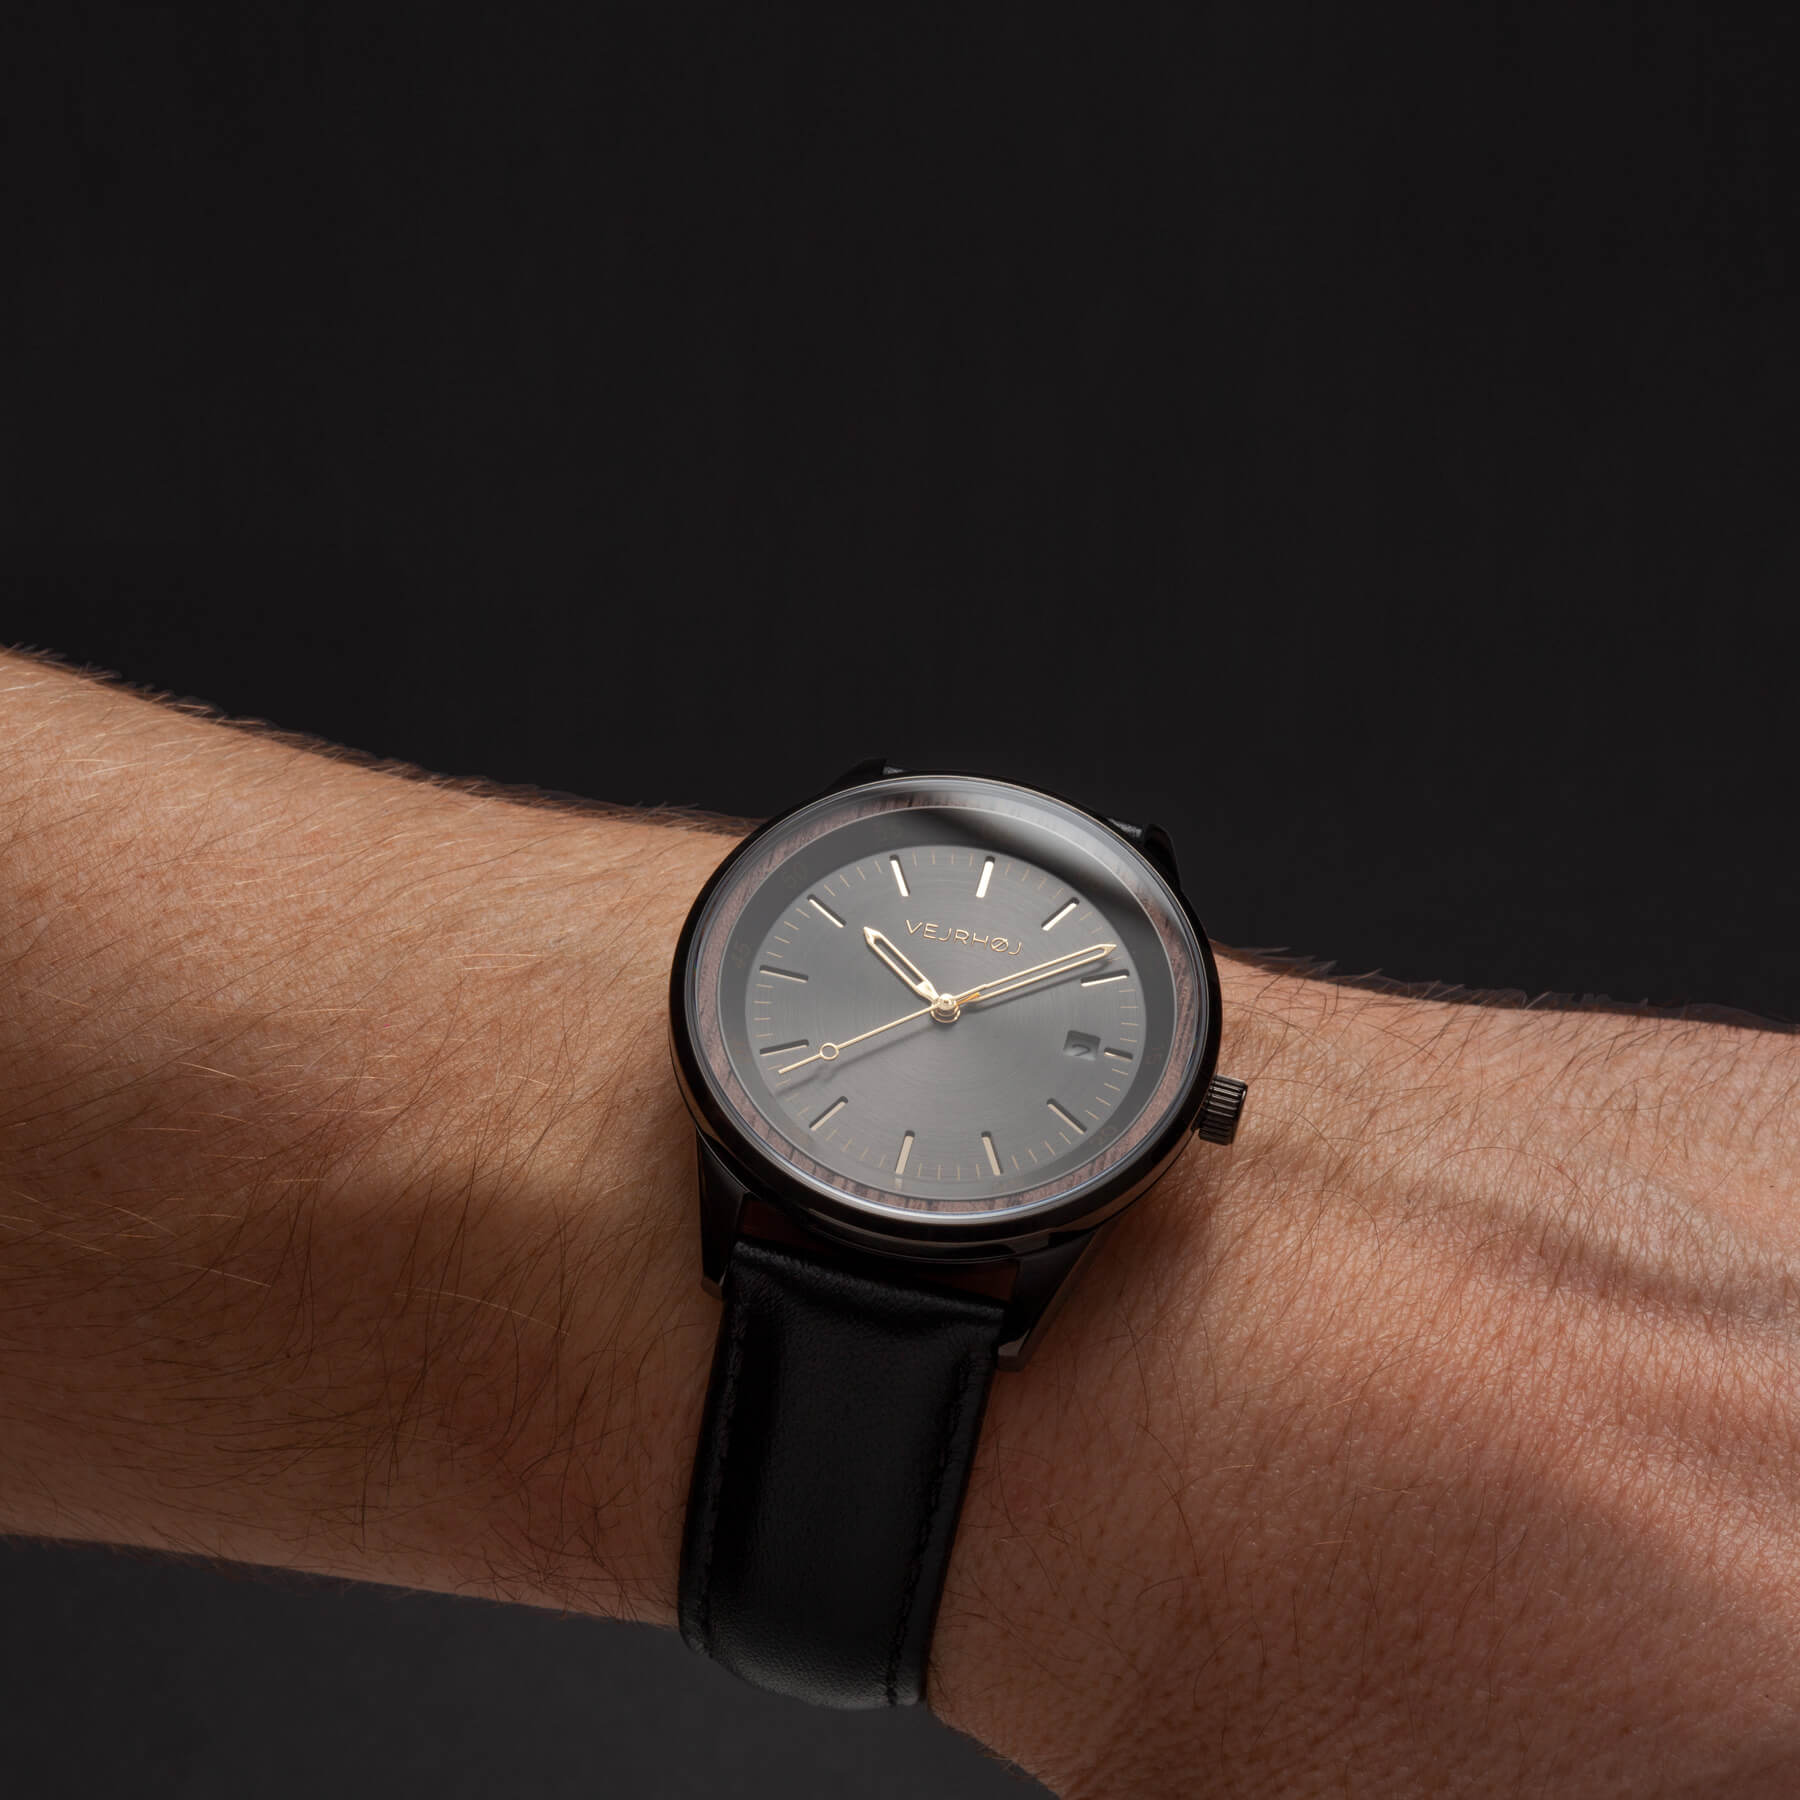 black automatic watch with black straps worn on a wrist